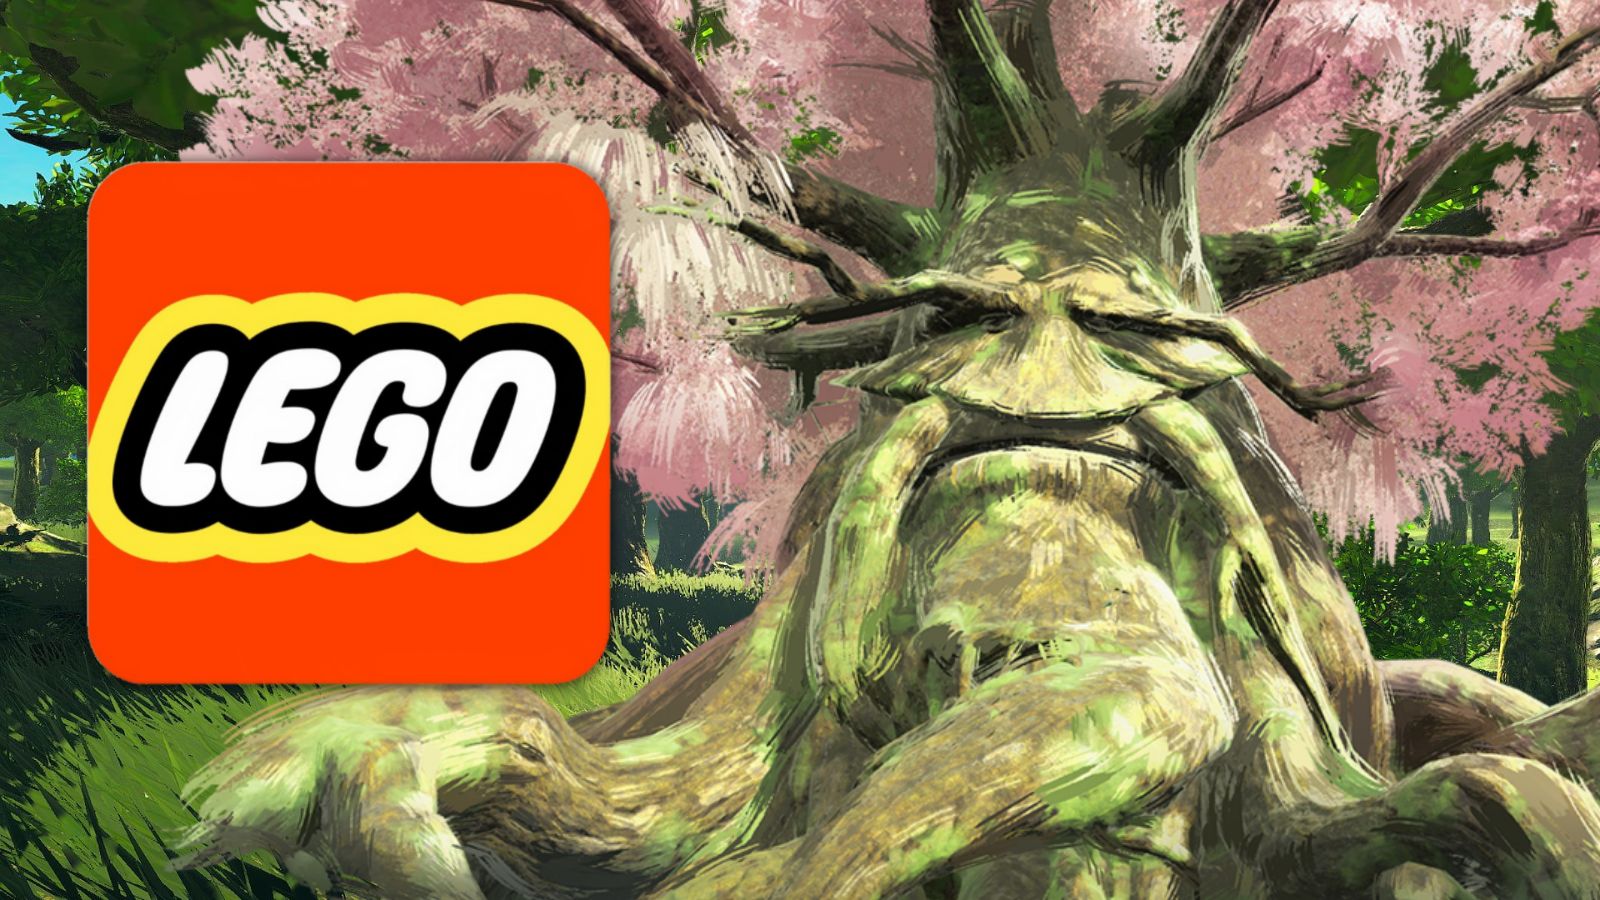 Rumors suggest Legend of Zelda Great Deku Tree LEGO set releasing in